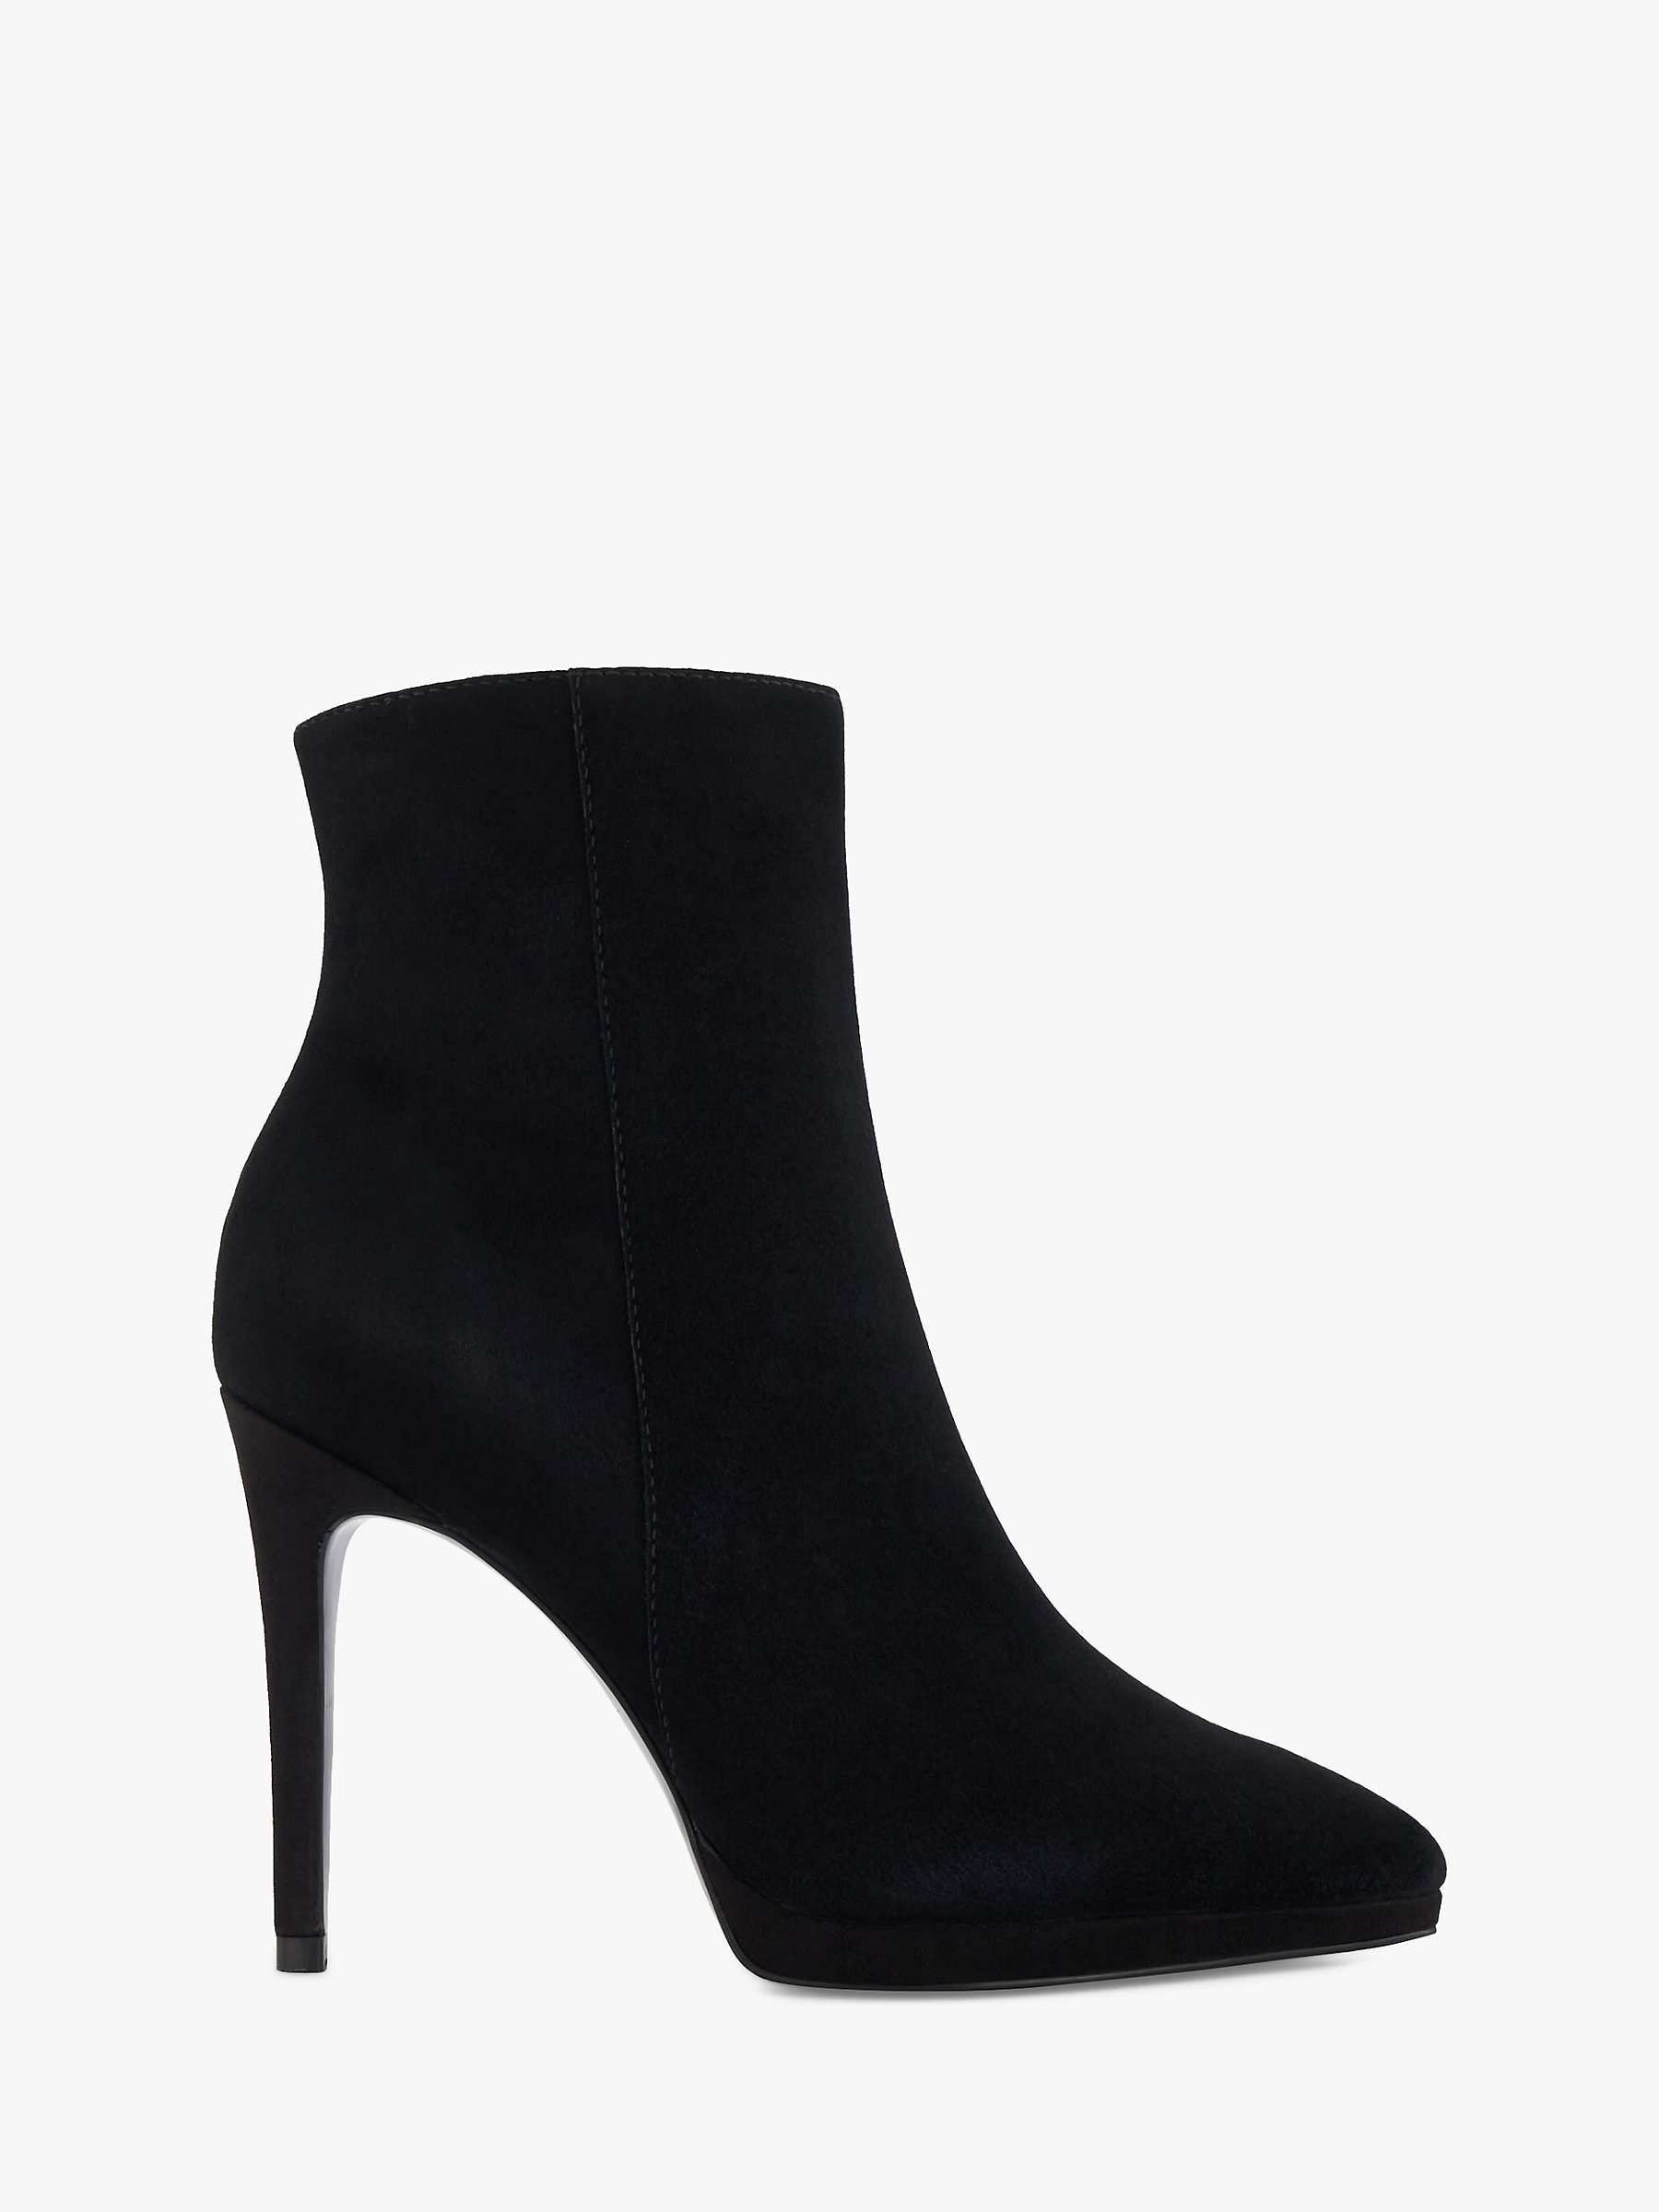 Buy Dune Octavia High Heel Suede Ankle Boots, Black Online at johnlewis.com